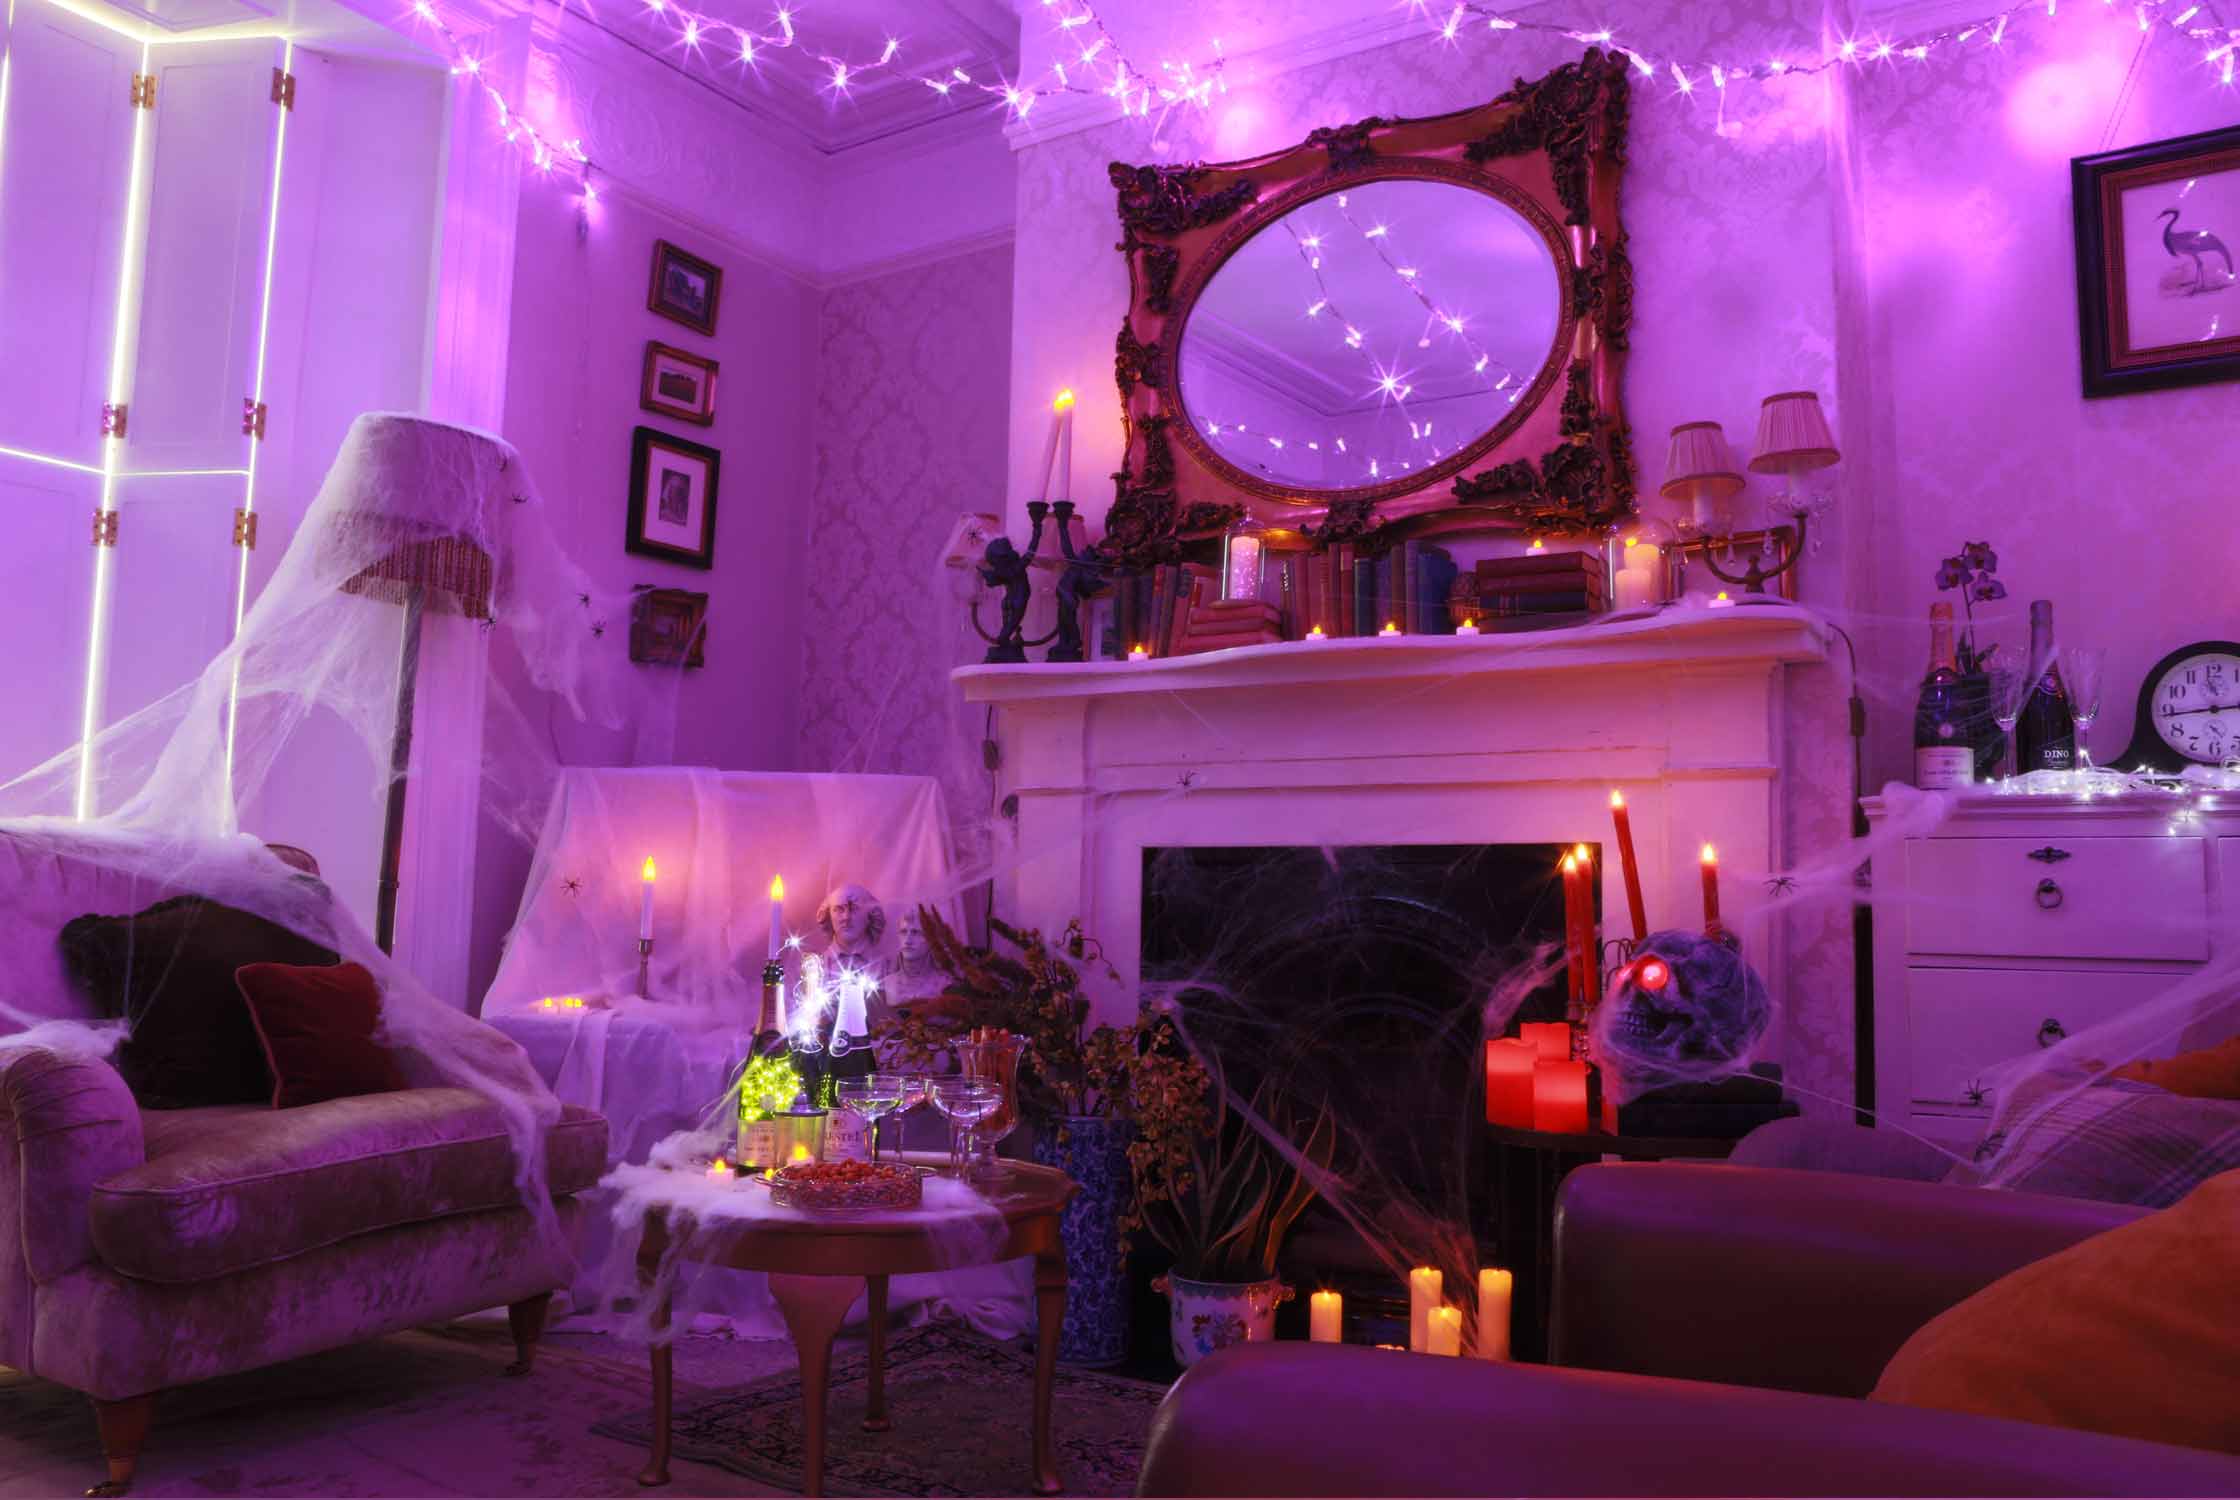 Новый свет комнаты. Фиолетовая комната Эстетика. Атмосфера комнаты. Декор на Хэллоуин фиолетовый. Хэллоуин Эстетика комната.